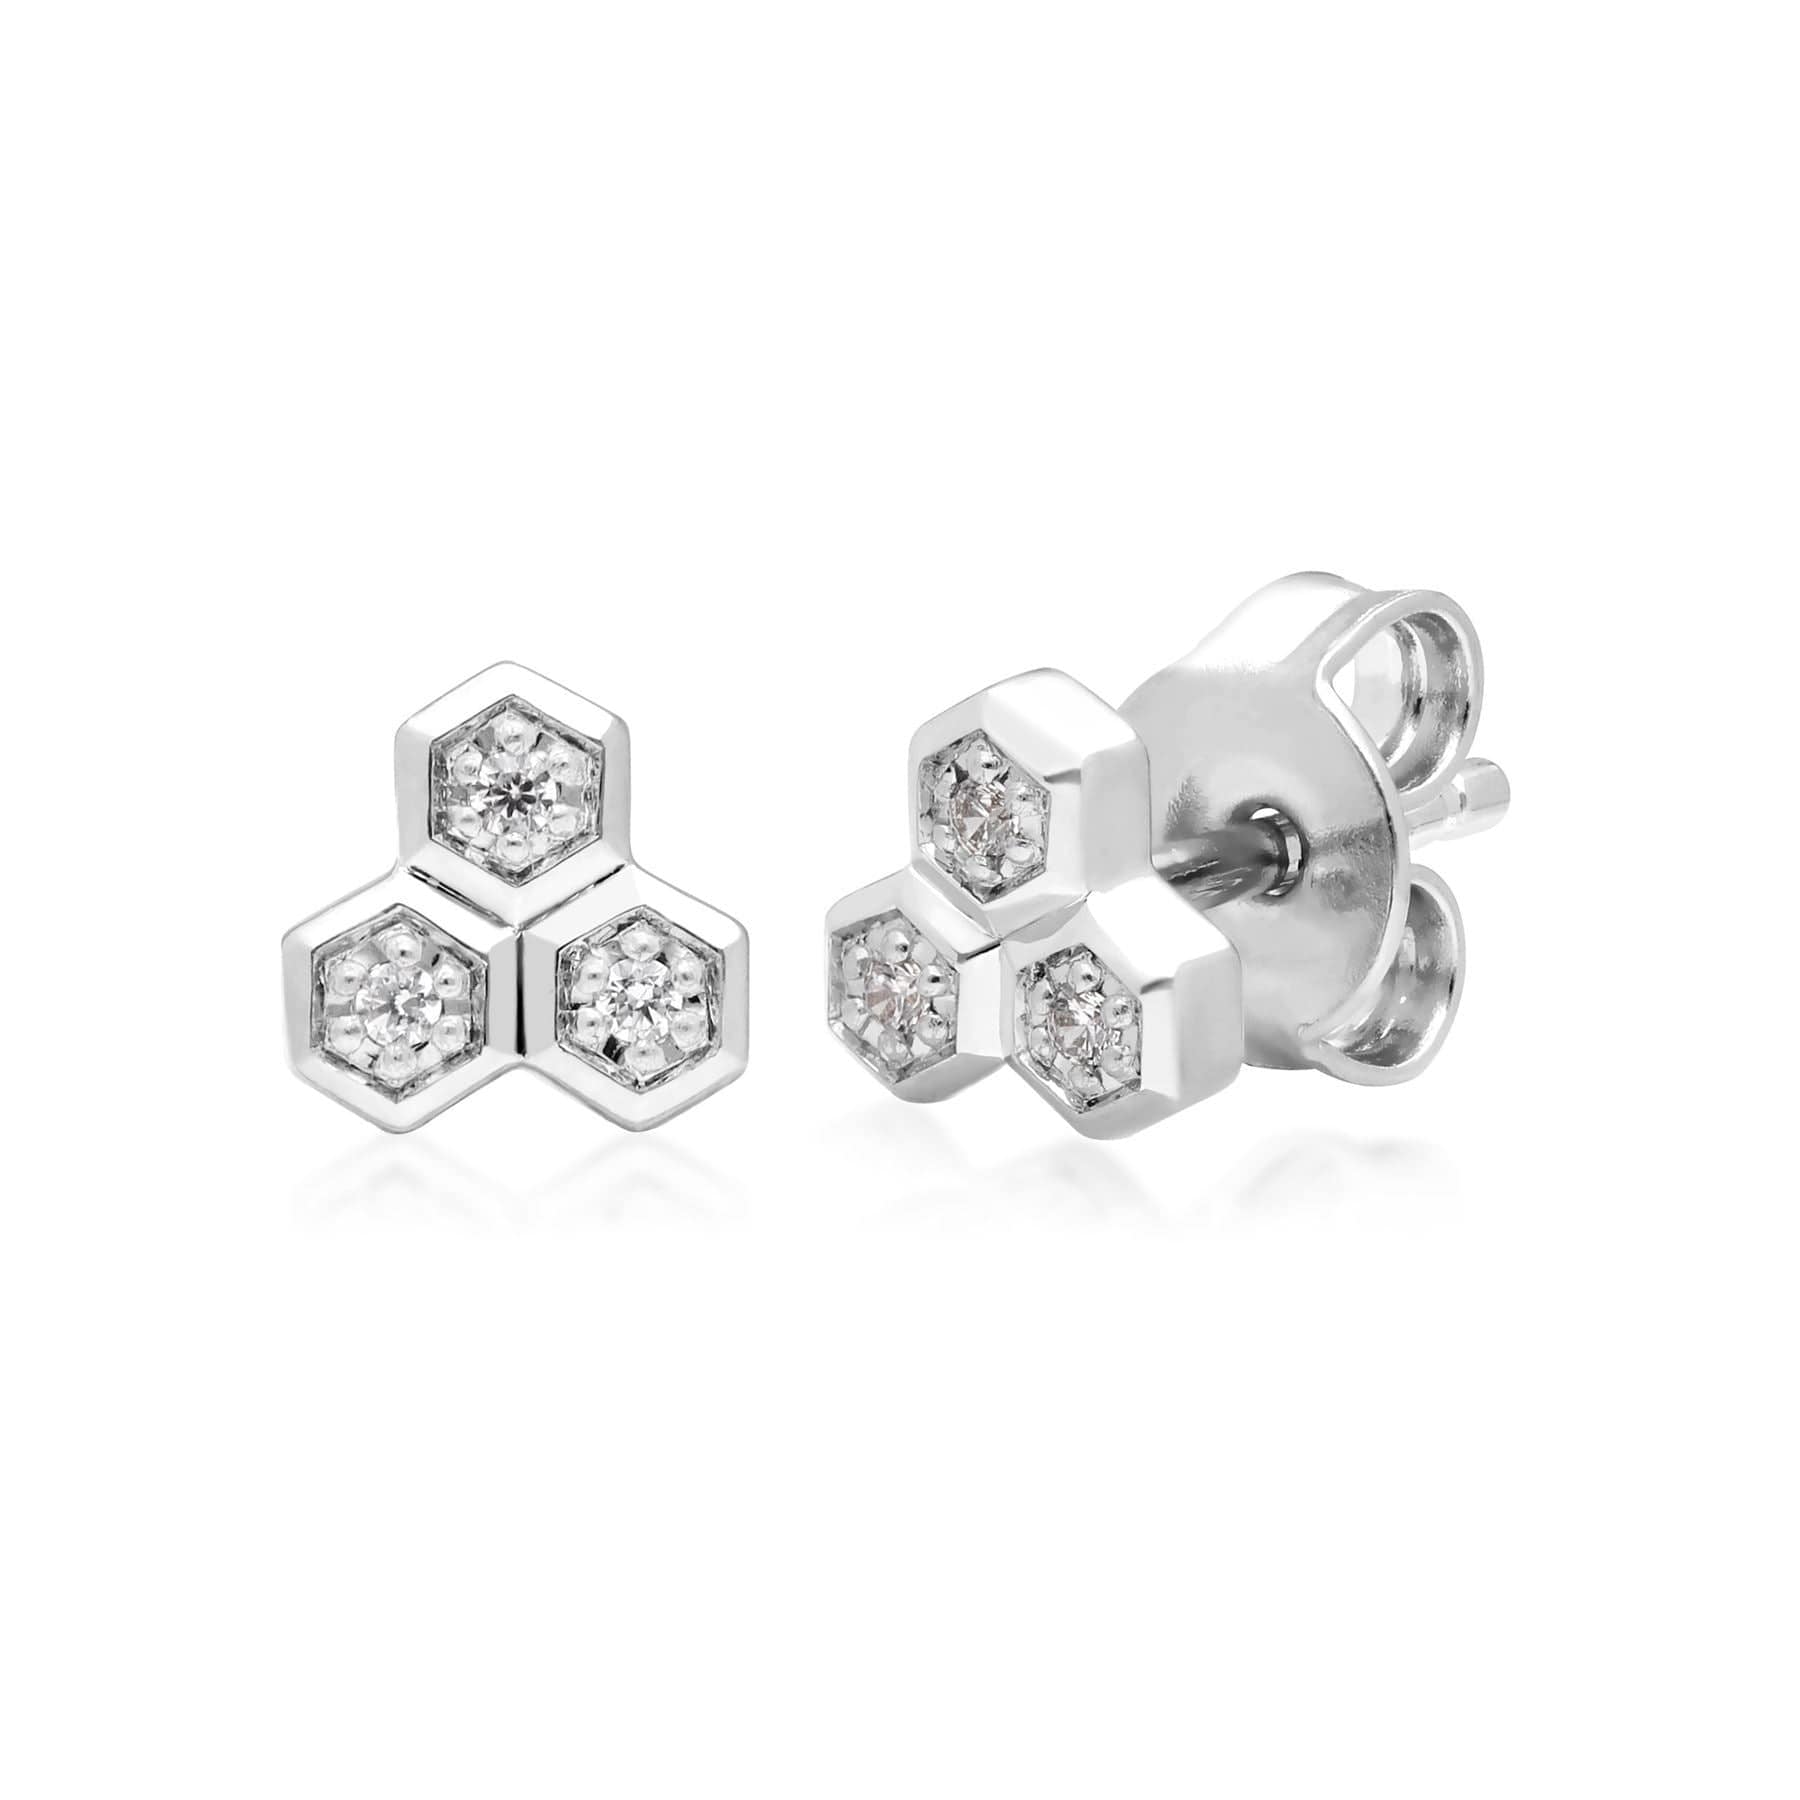 162E0272019-162R0393019 Diamond Trilogy Ring & Stud Earring Set in 9ct White Gold 2